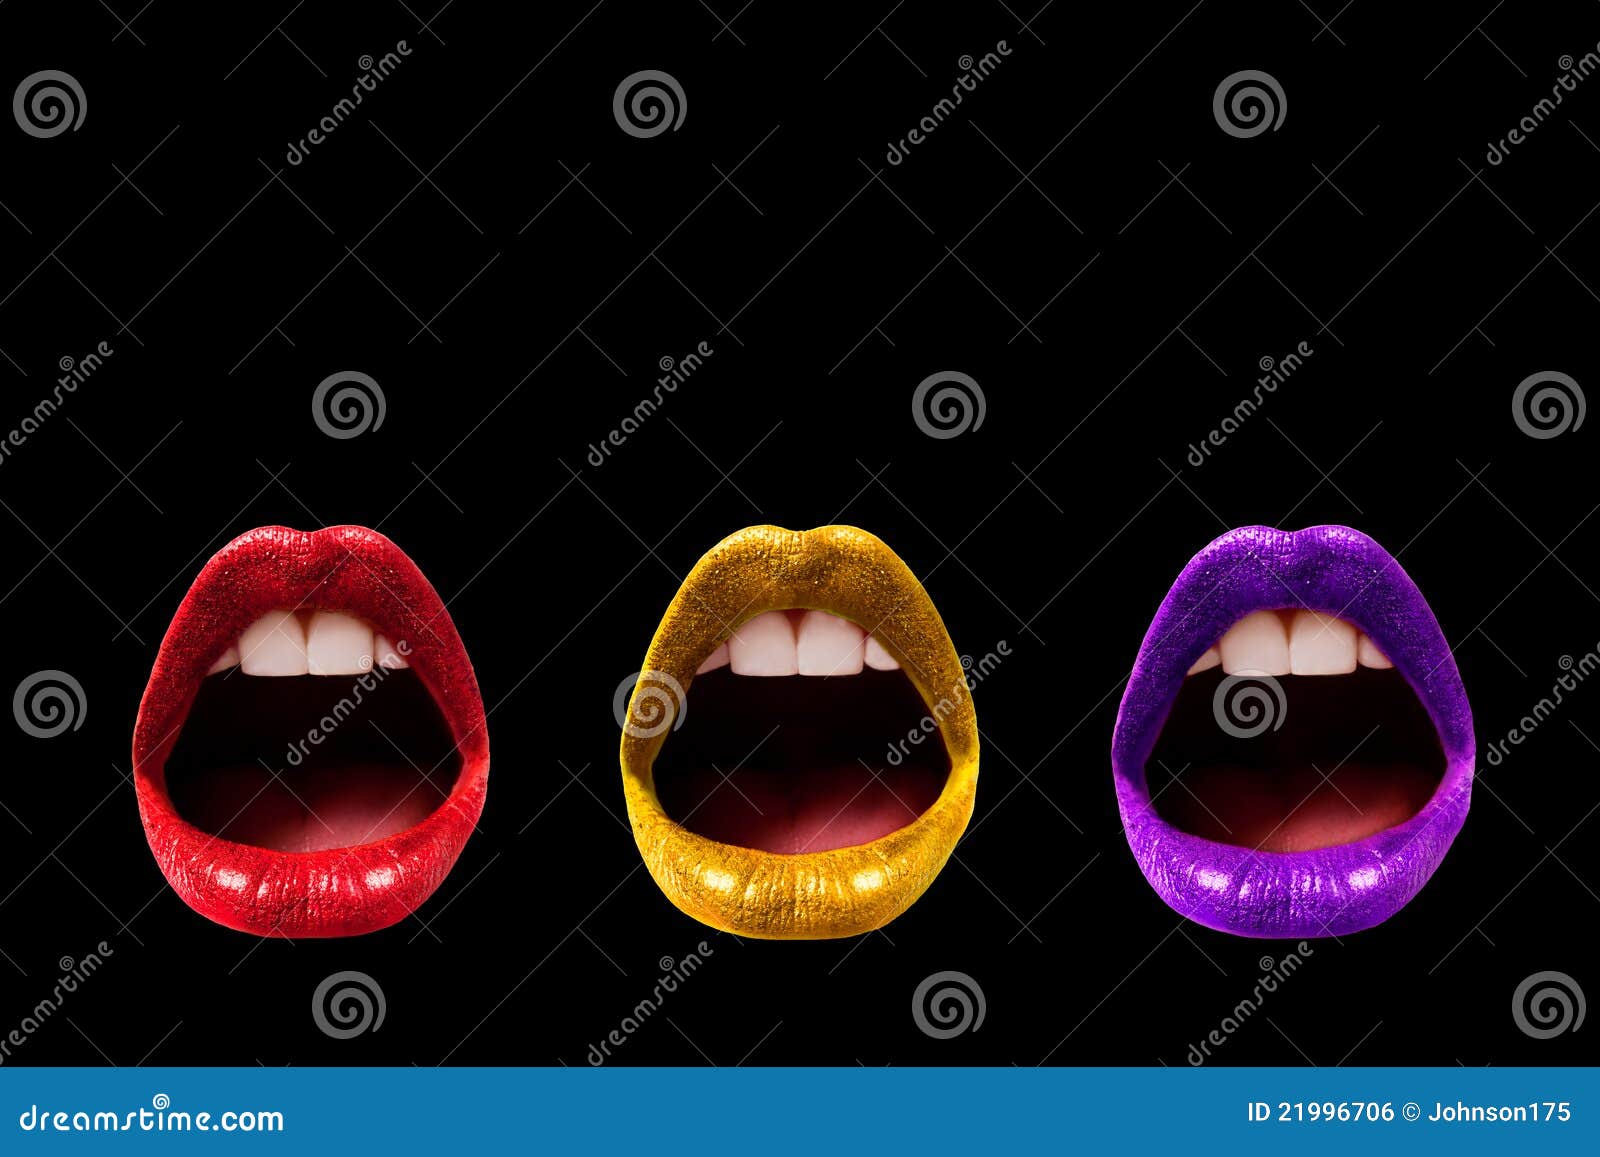 trio of lips  on black